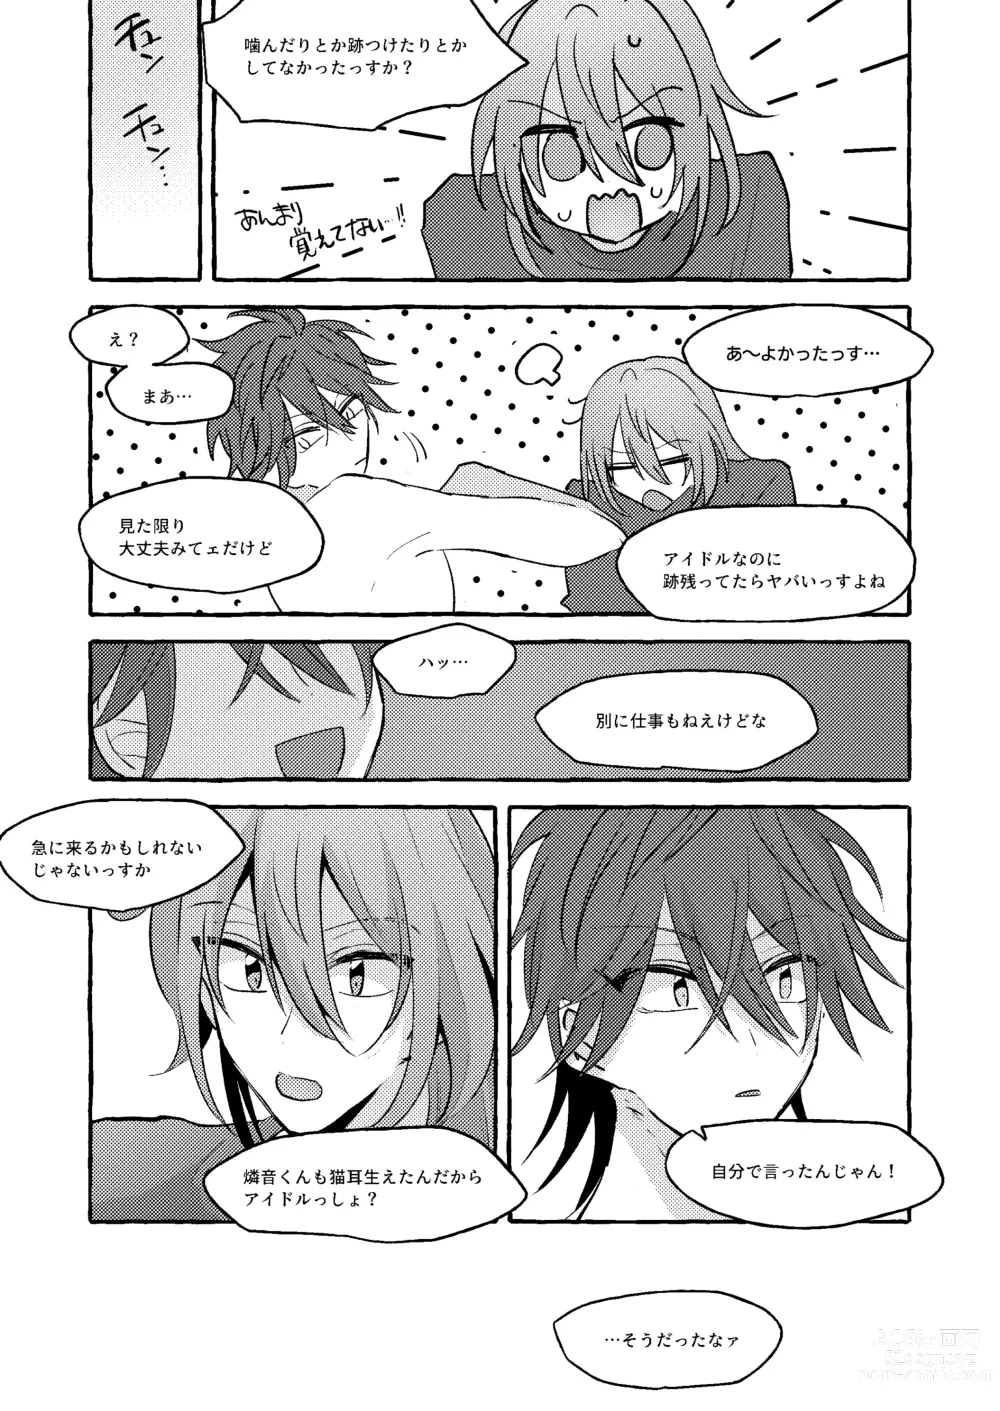 Page 26 of doujinshi Neko Hon